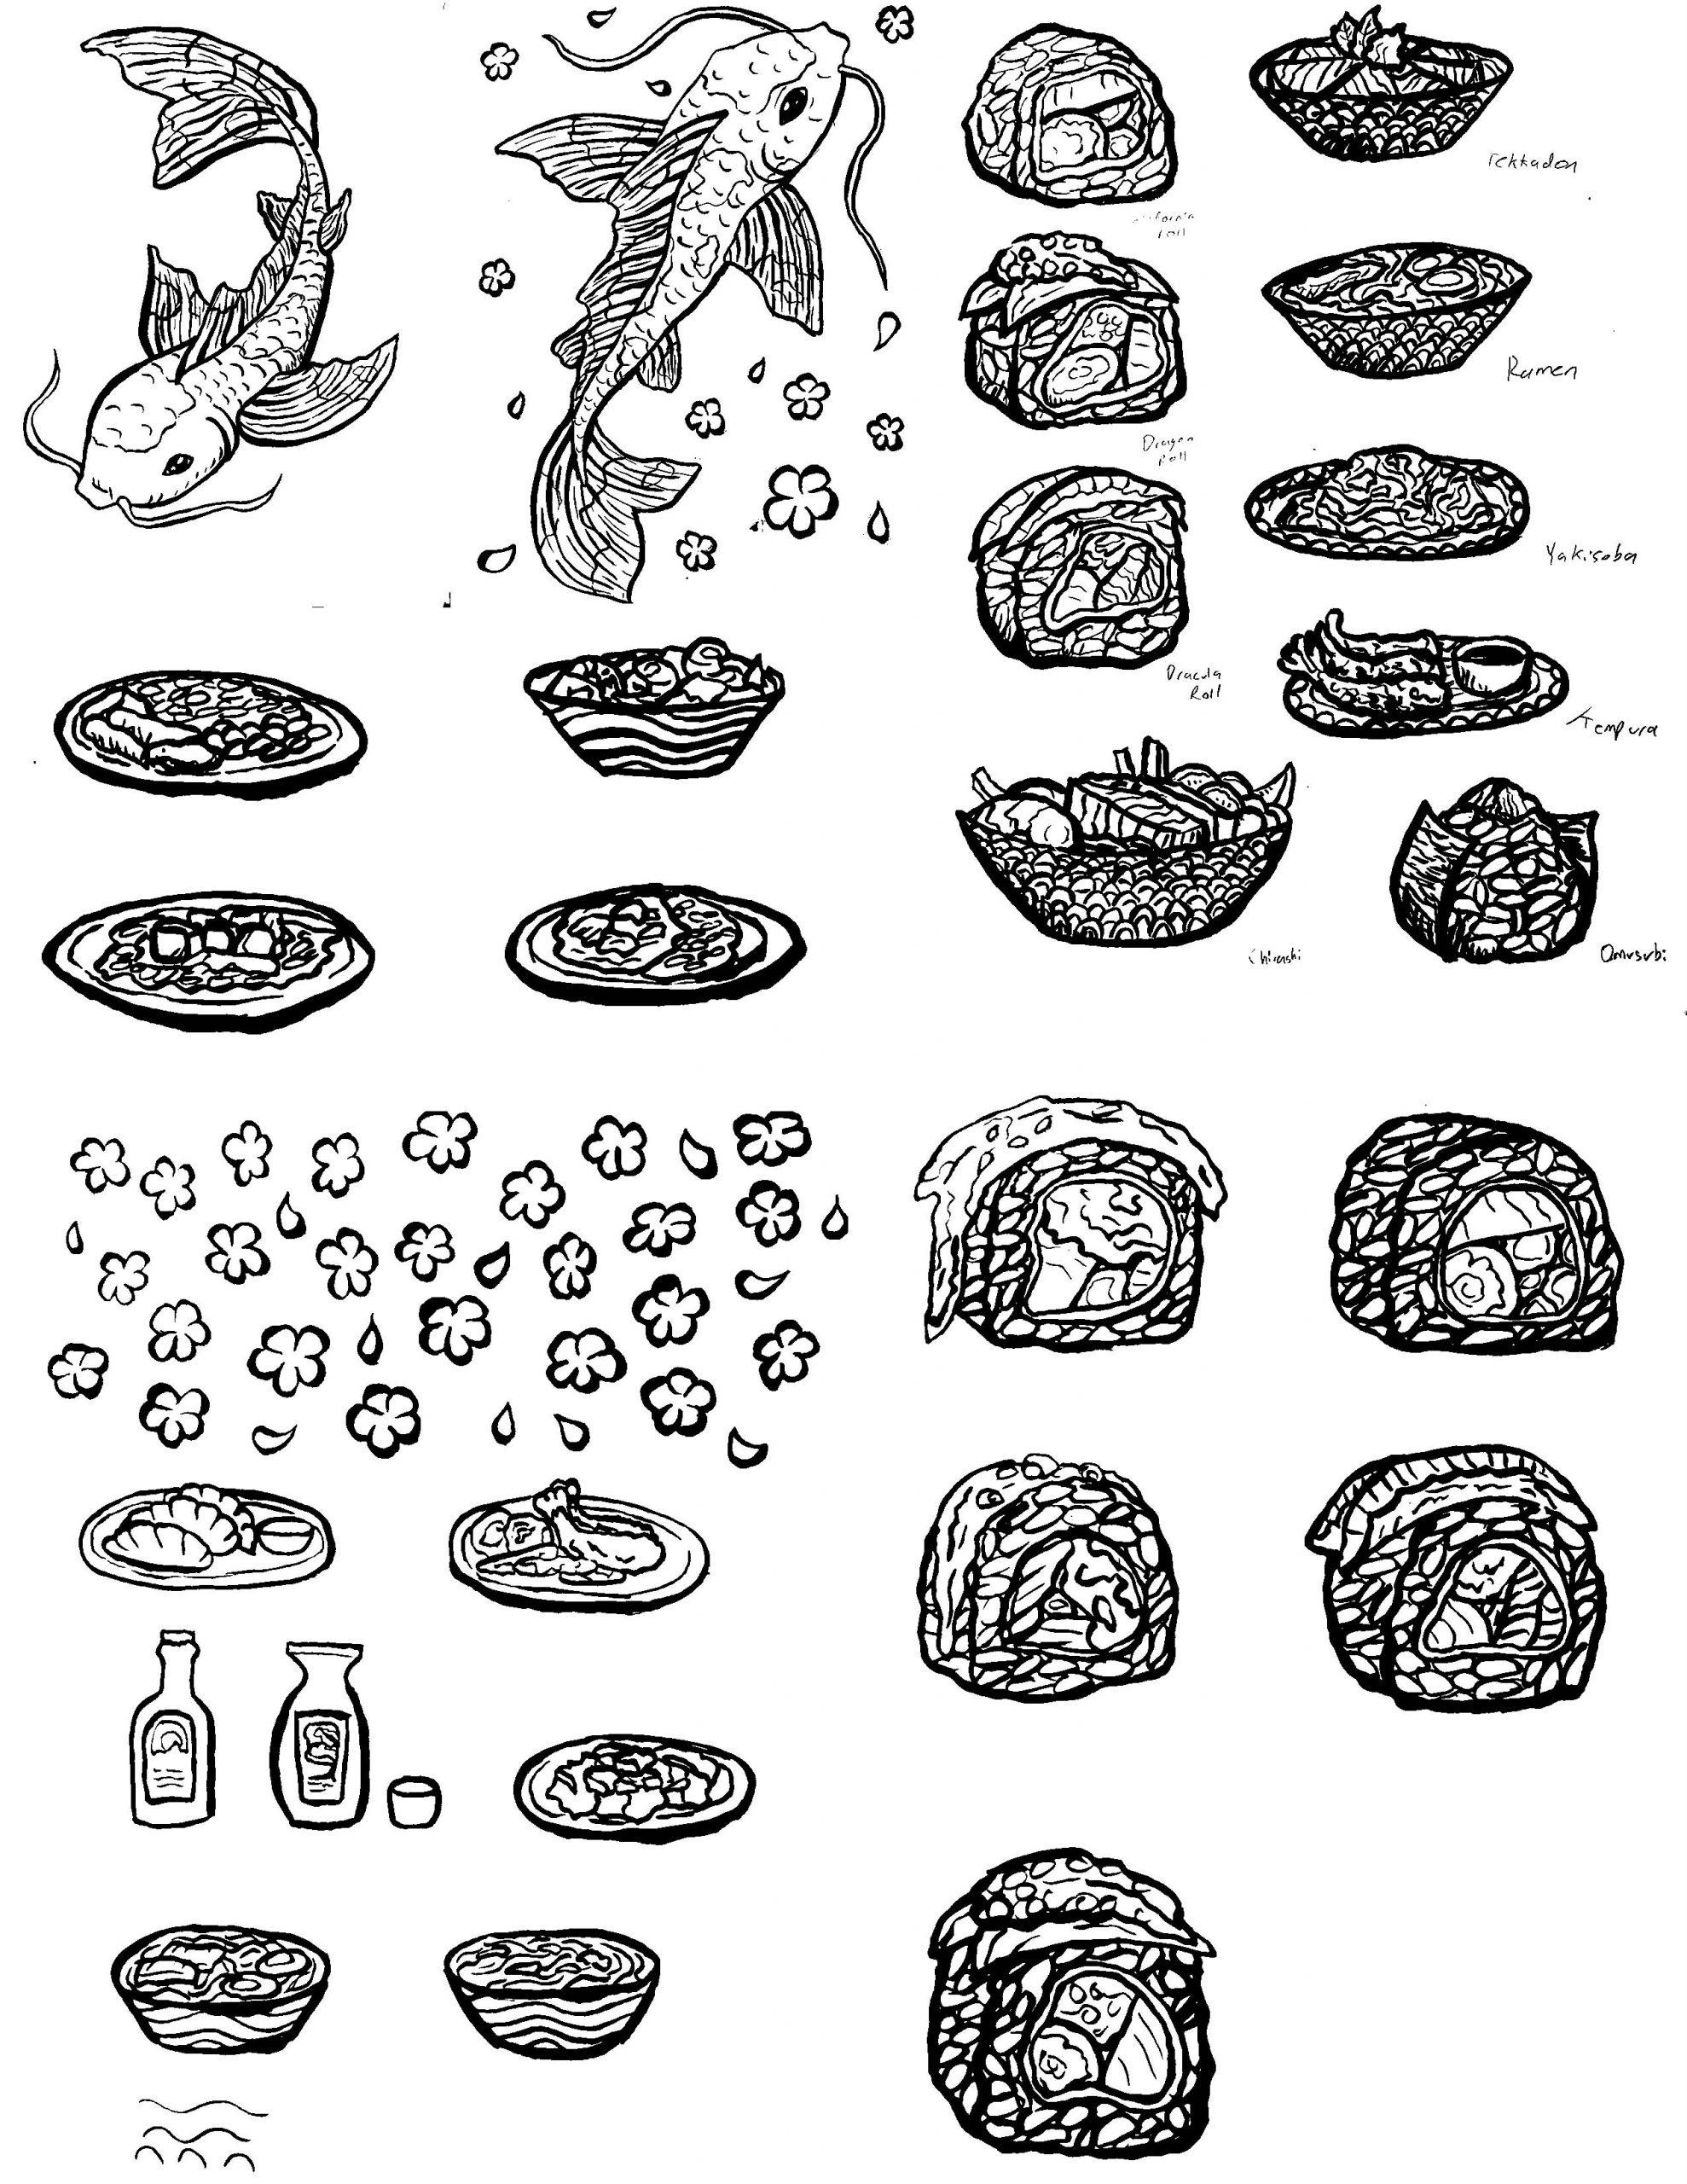 kunikos-illustrations-collage